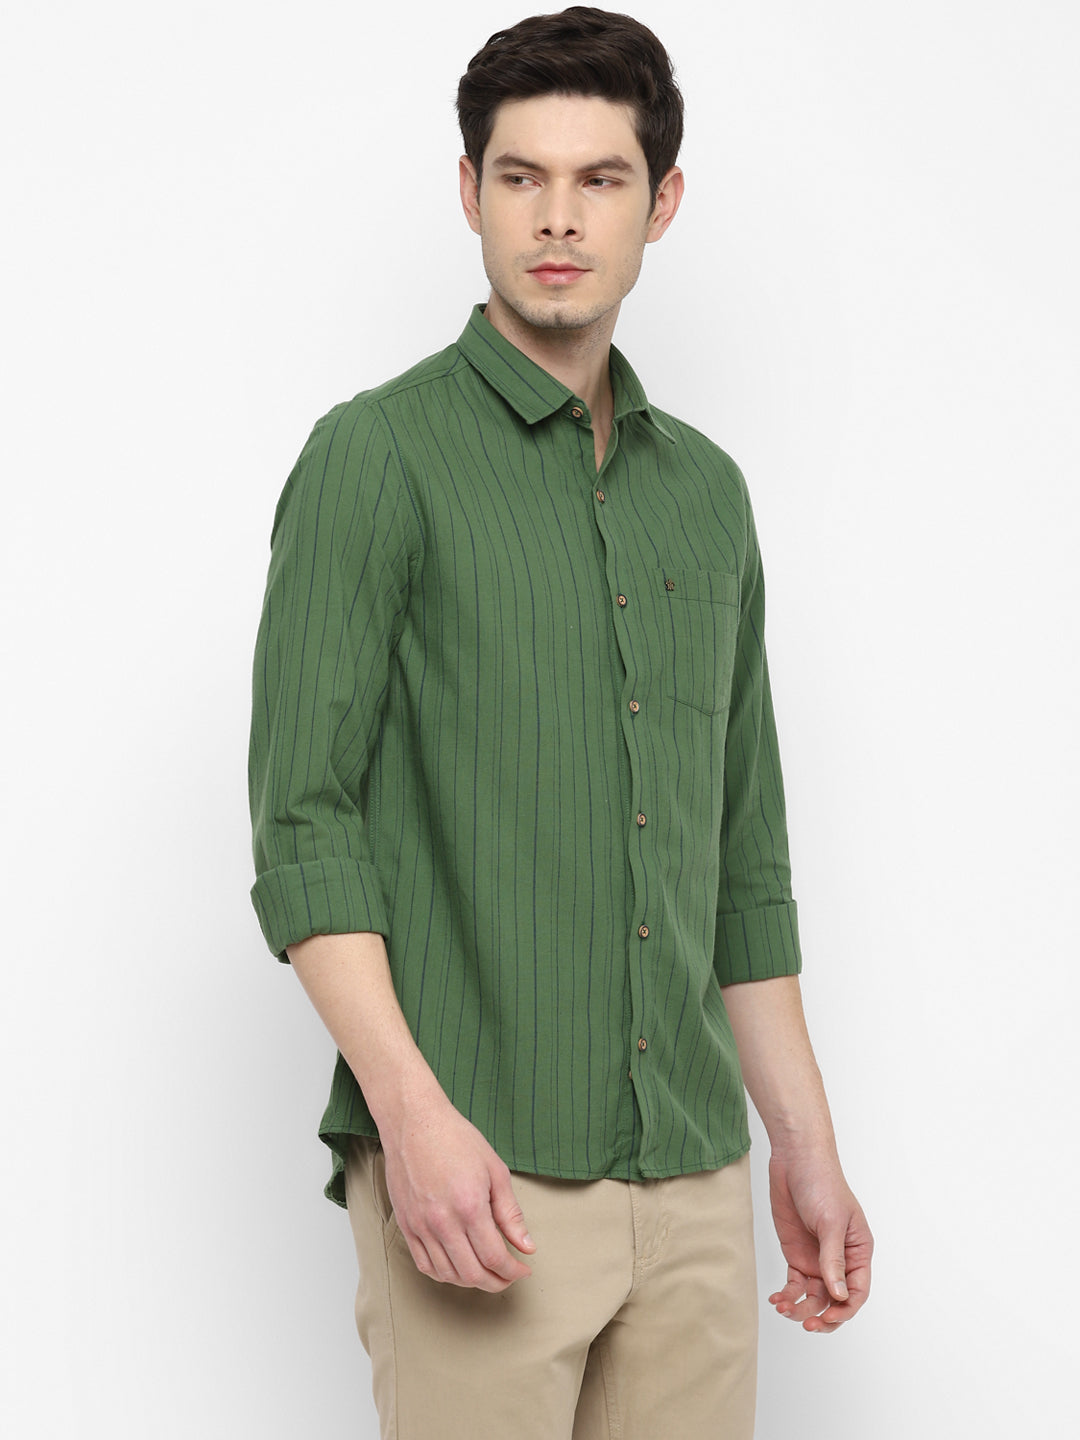 Stripe Green Slim Fit Causal Shirt